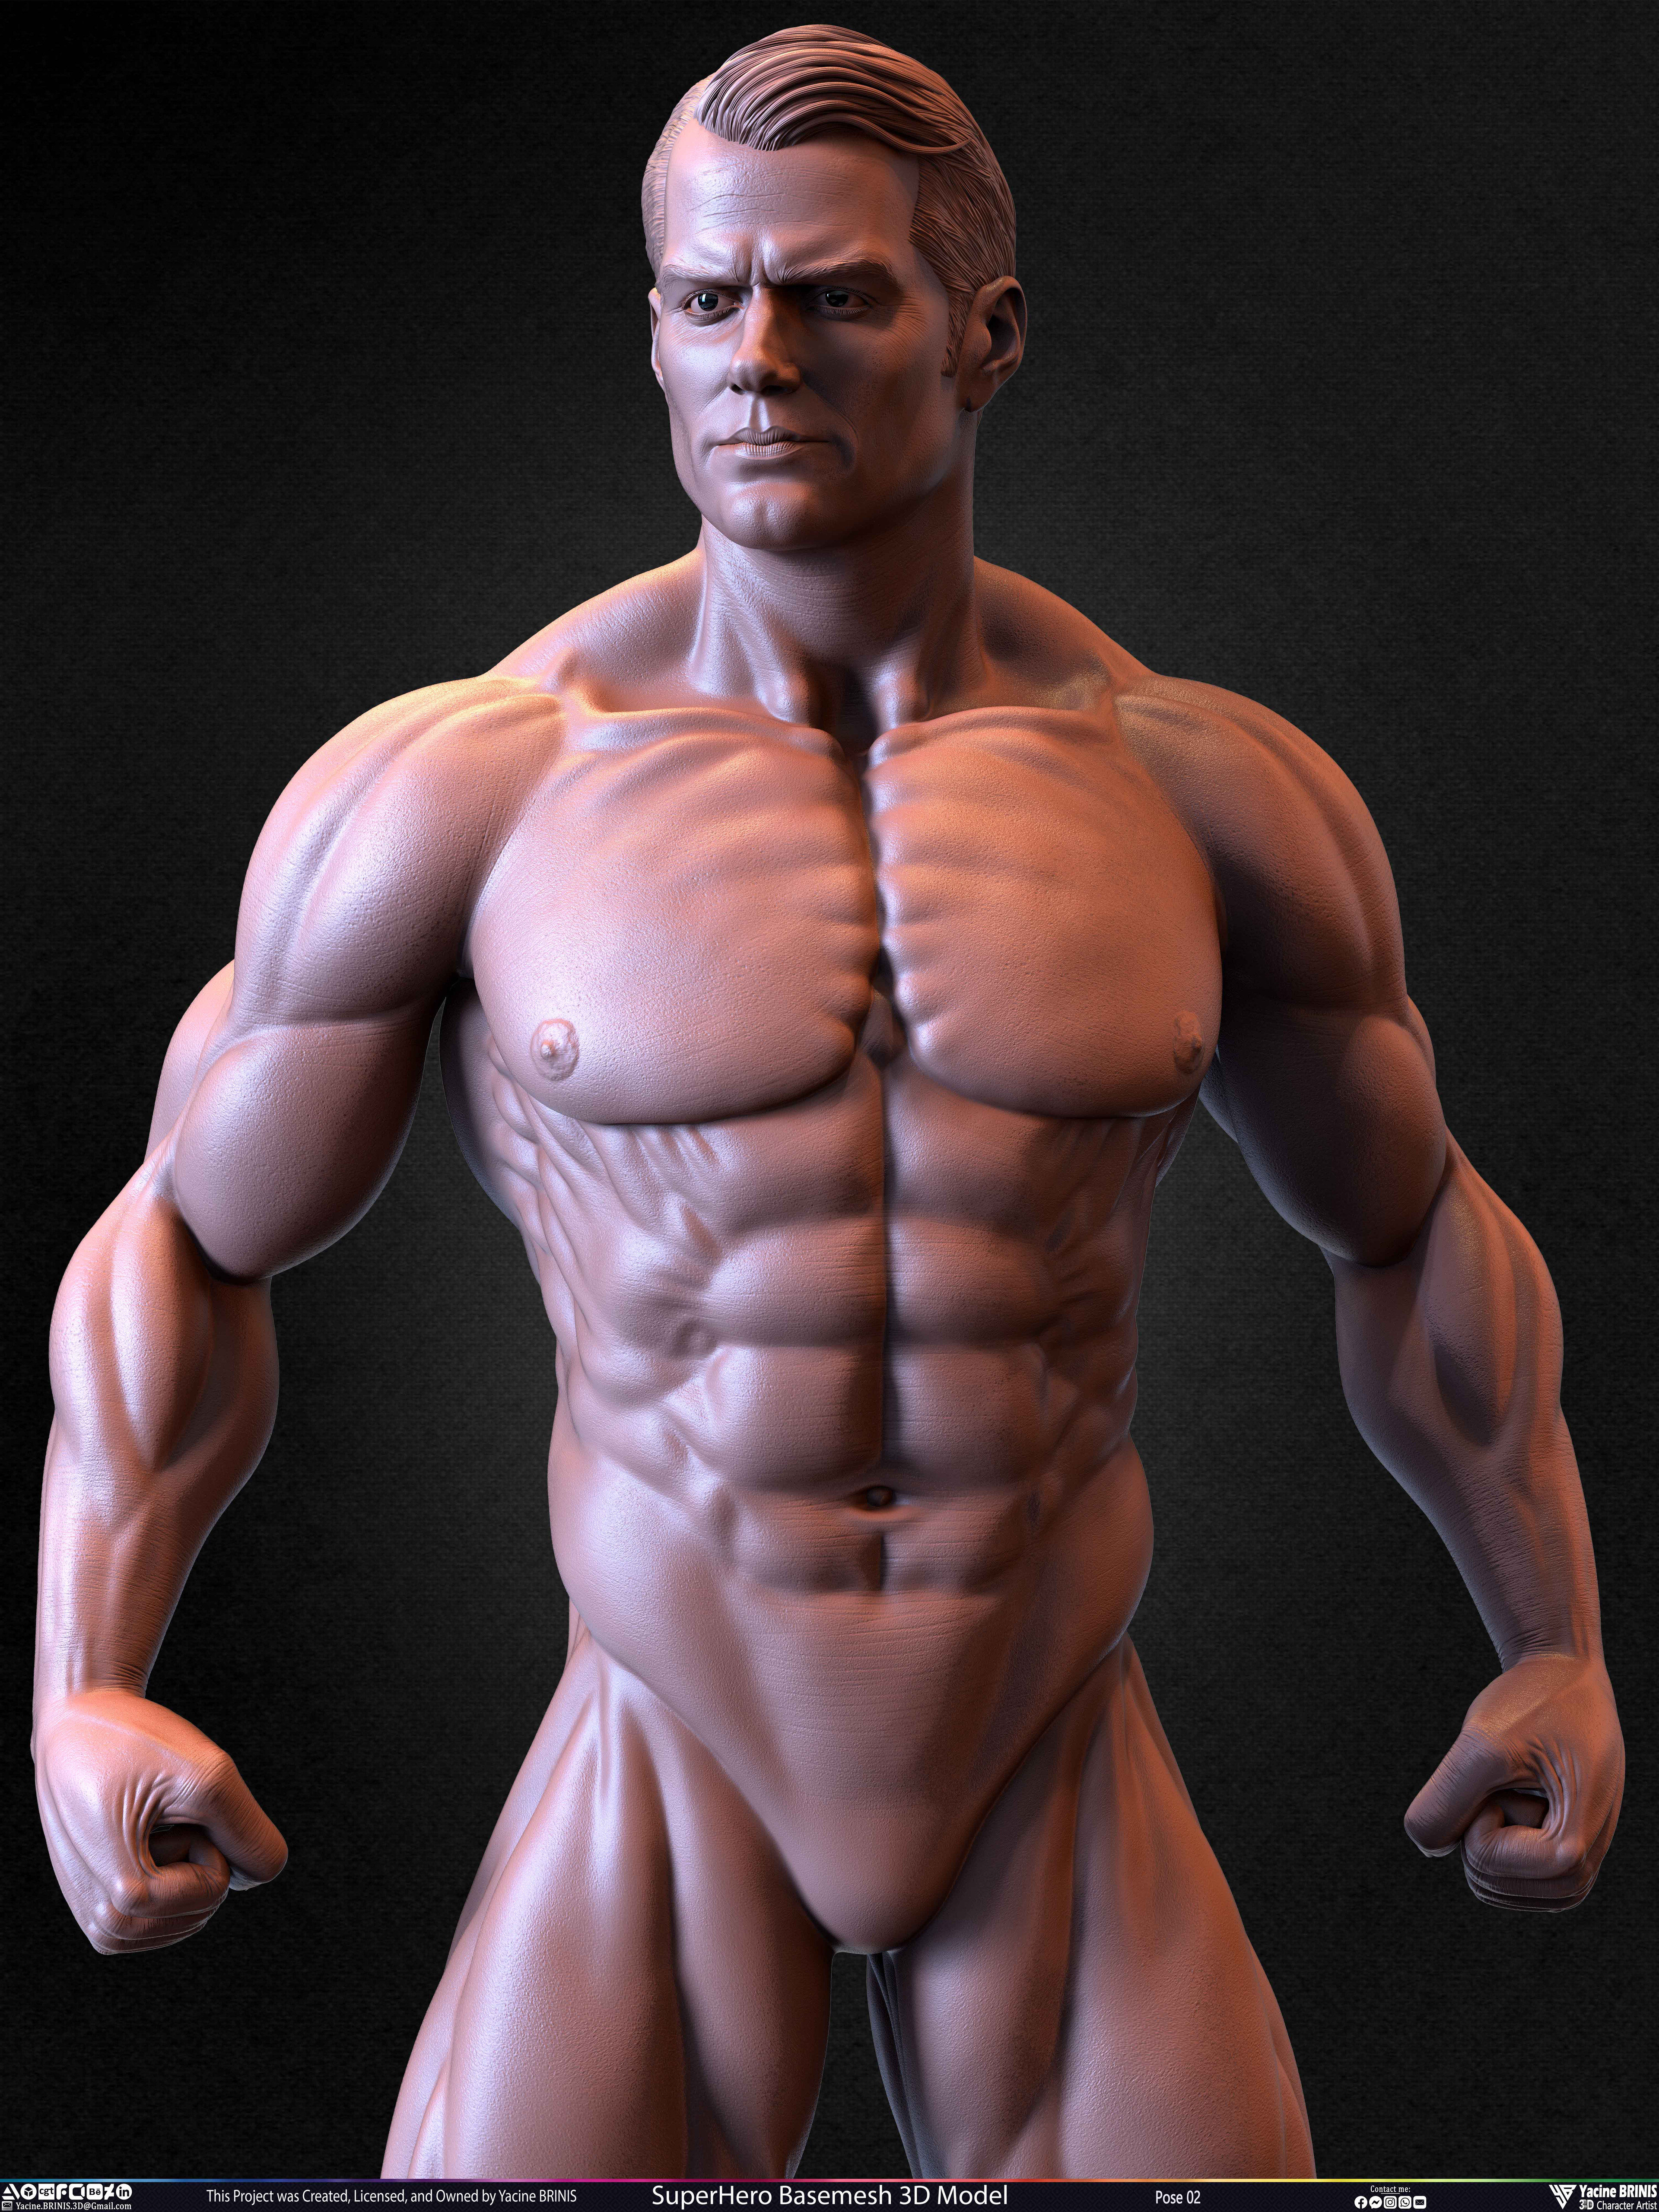 Super-Hero Basemesh 3D Model - Henry Cavill- Man of Steel - Superman - Pose 02 Sculpted by Yacine BRINIS Set 028